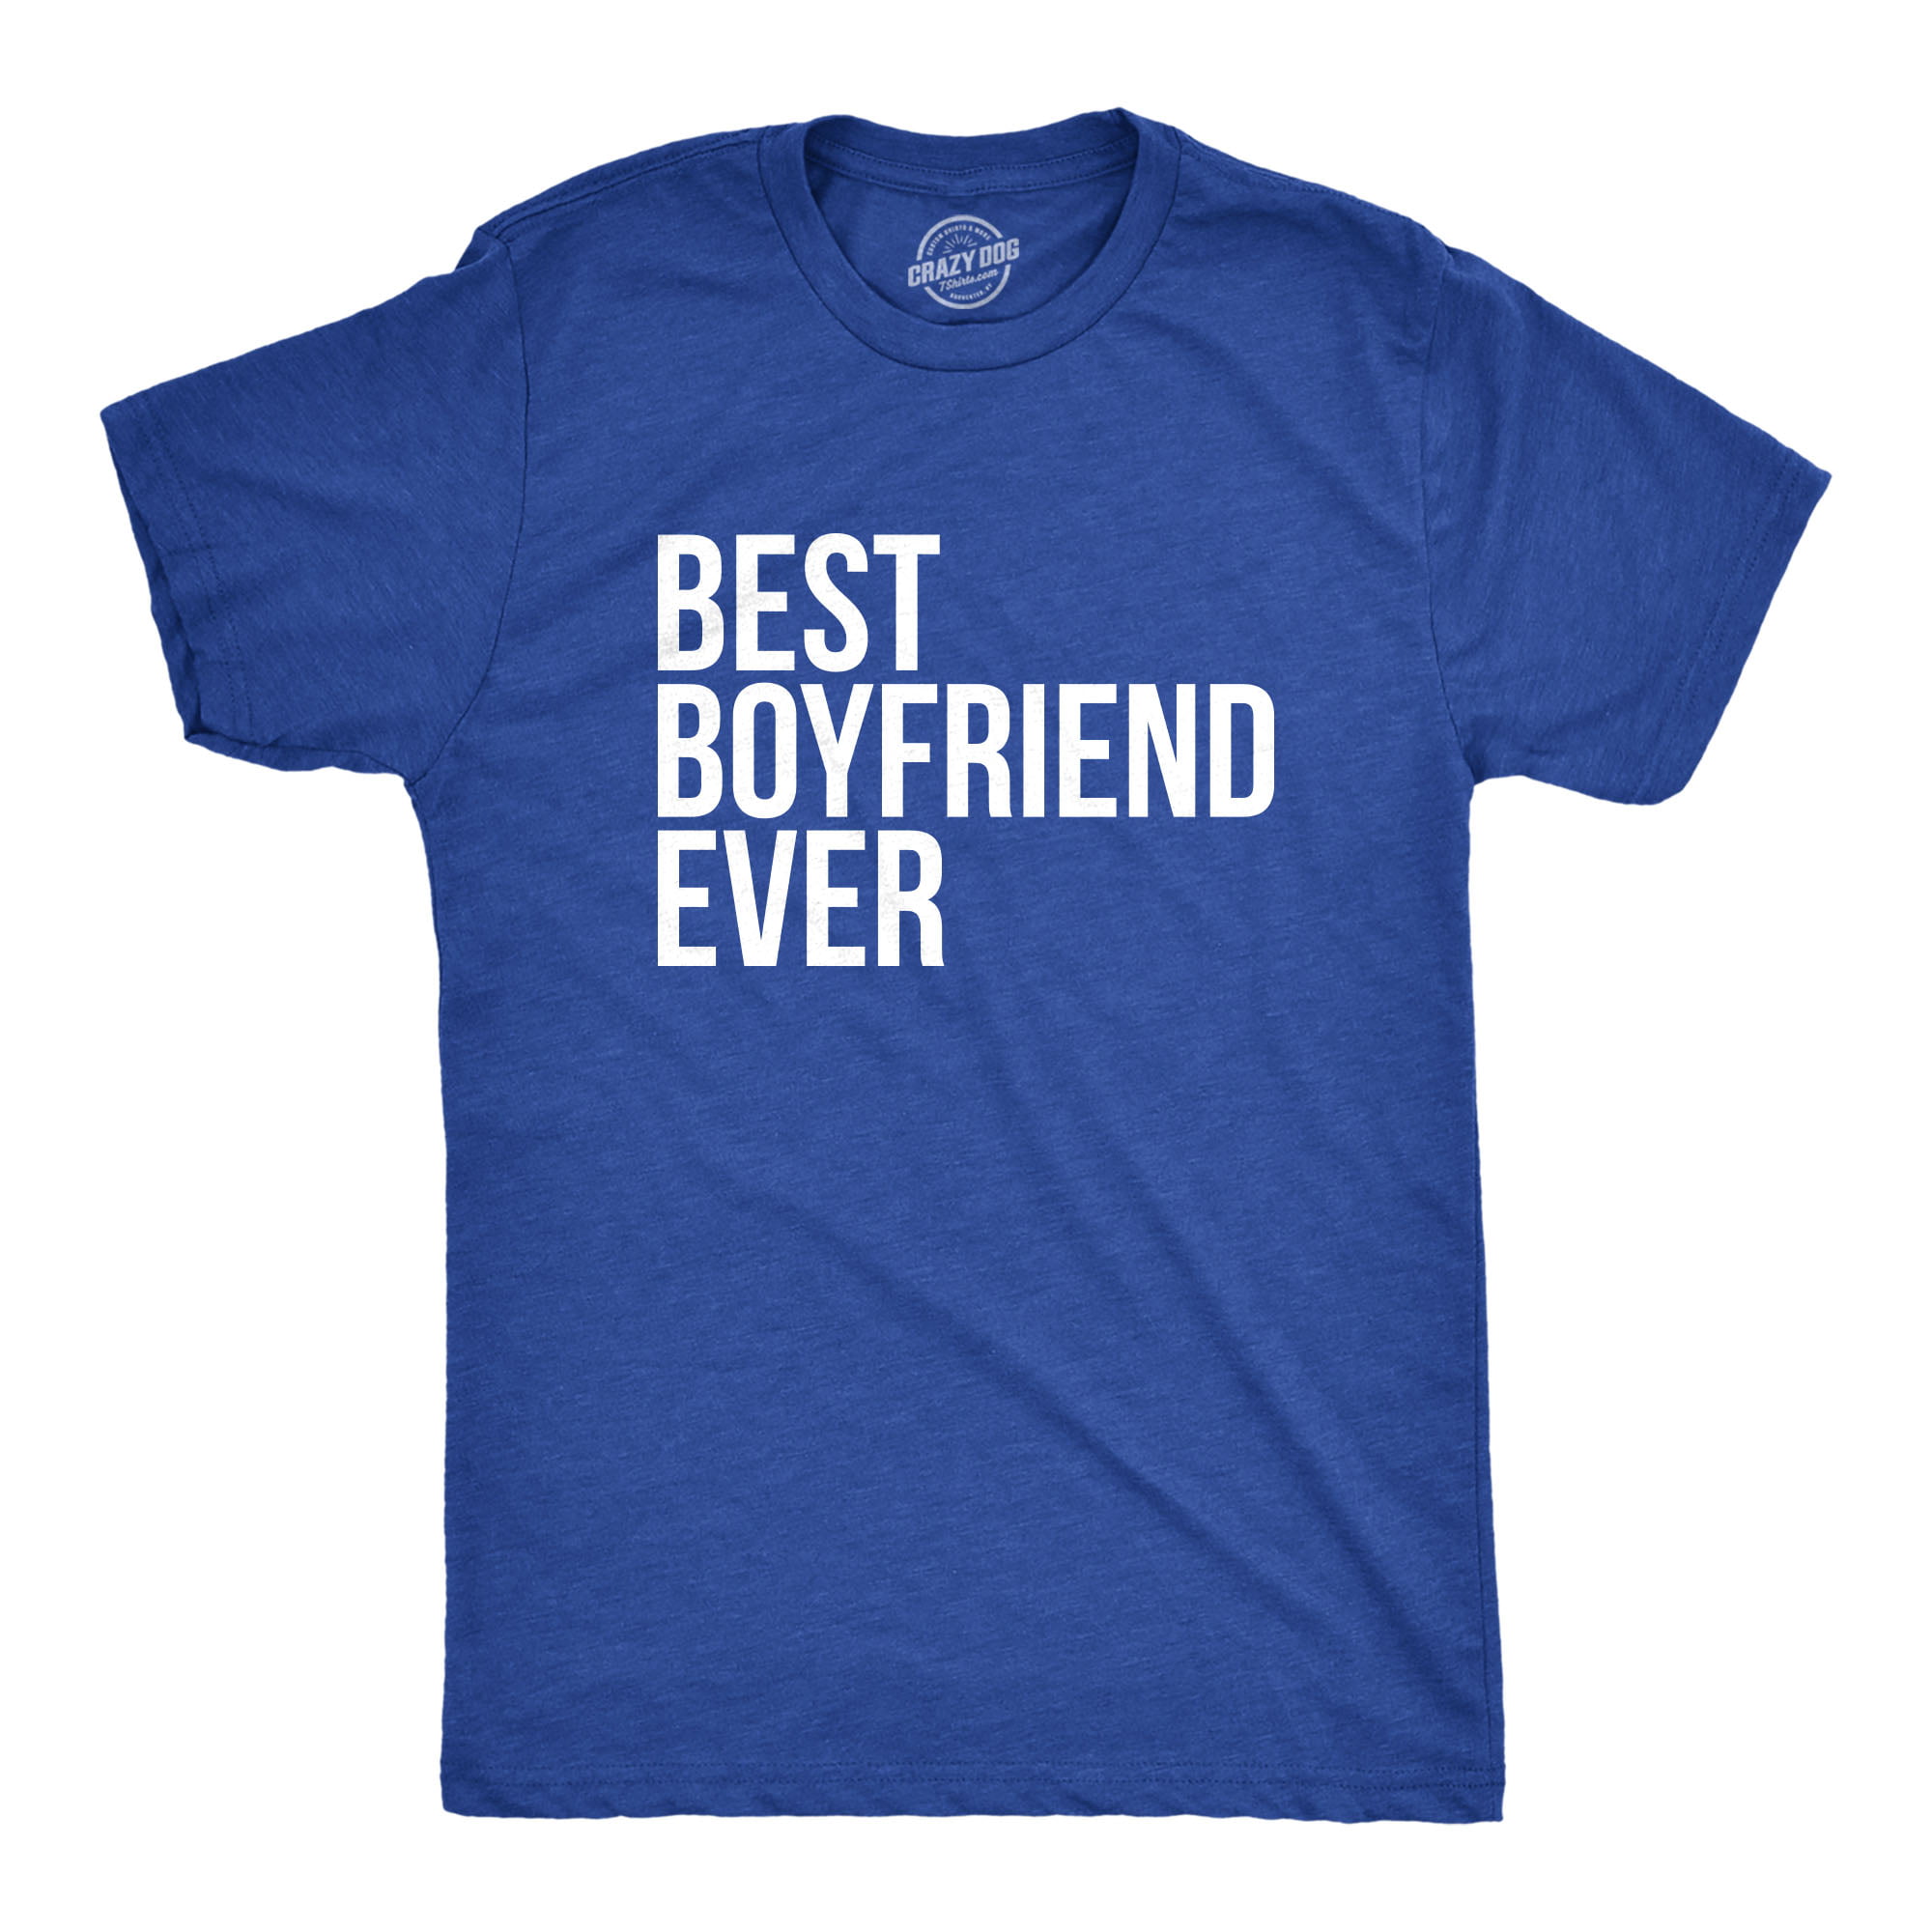 Crazy Dog T Shirts Best Boyfriend Ever T Shirt Funny Dating Shirt I Love My Boyfriend Tee Walmart Com Walmart Com